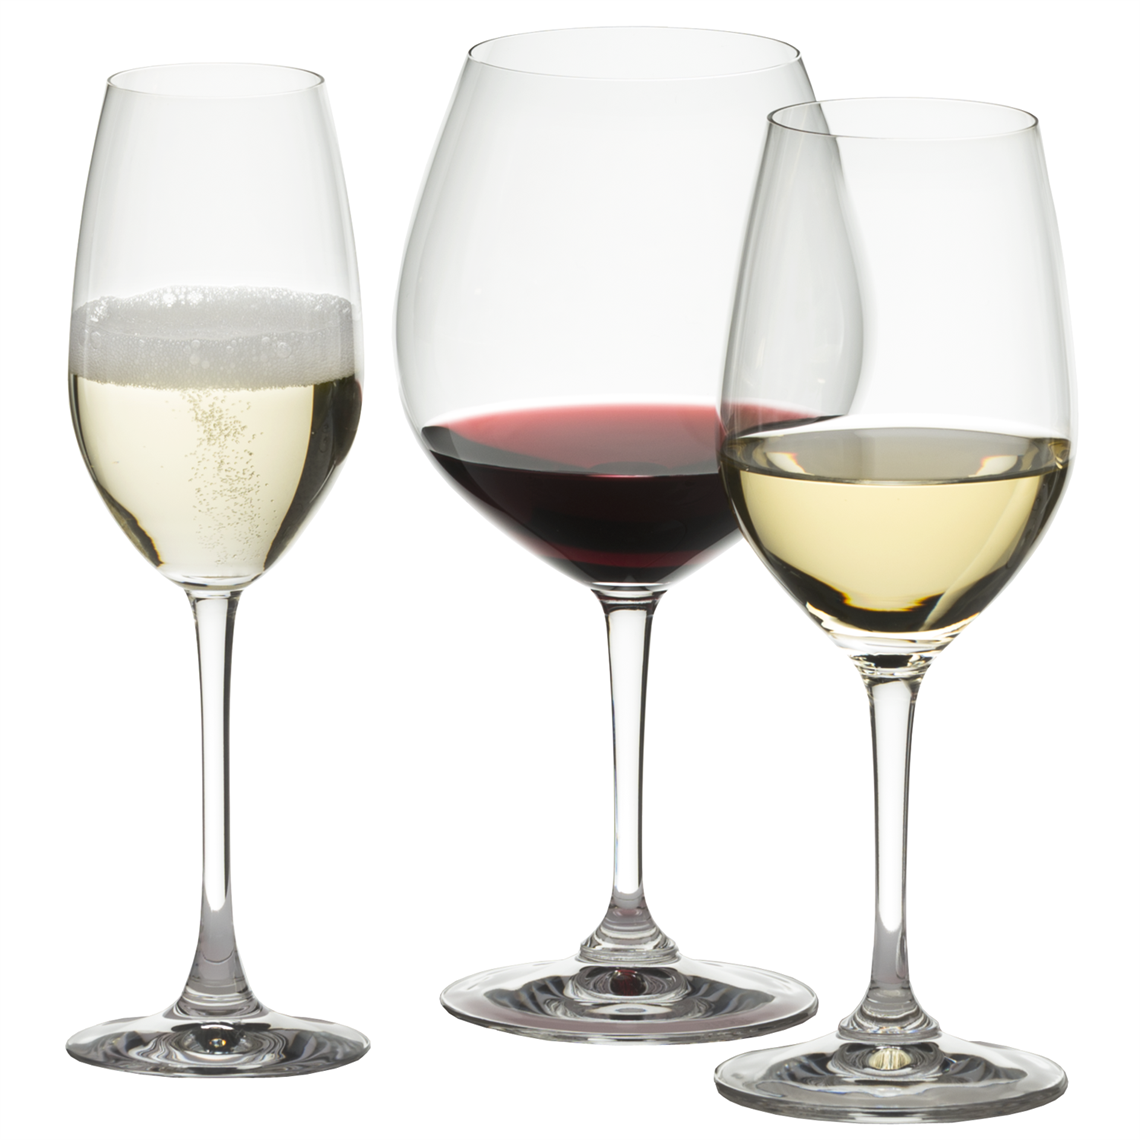 View more wine tasting glasses from our Restaurant & Trade Glasses range